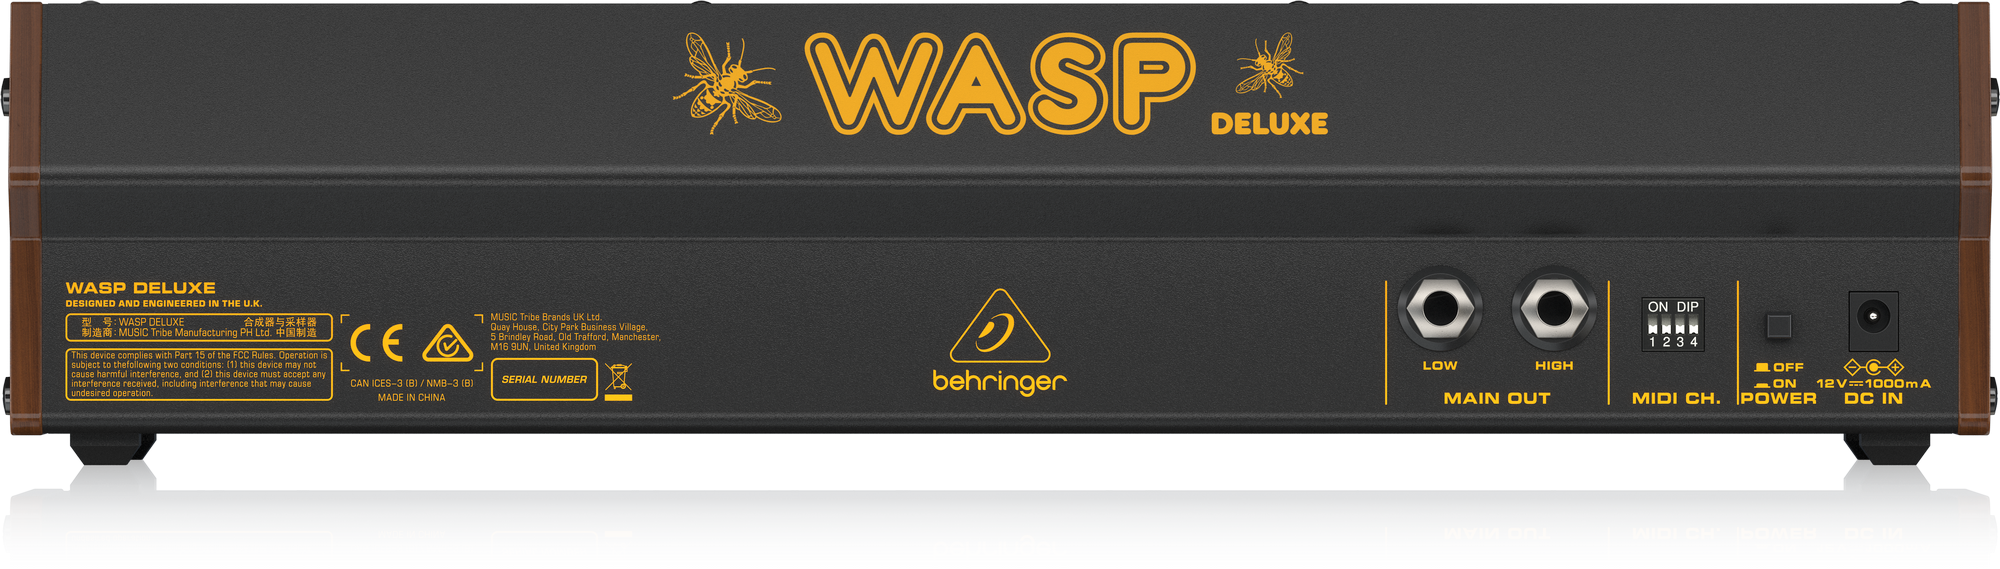 wasp back